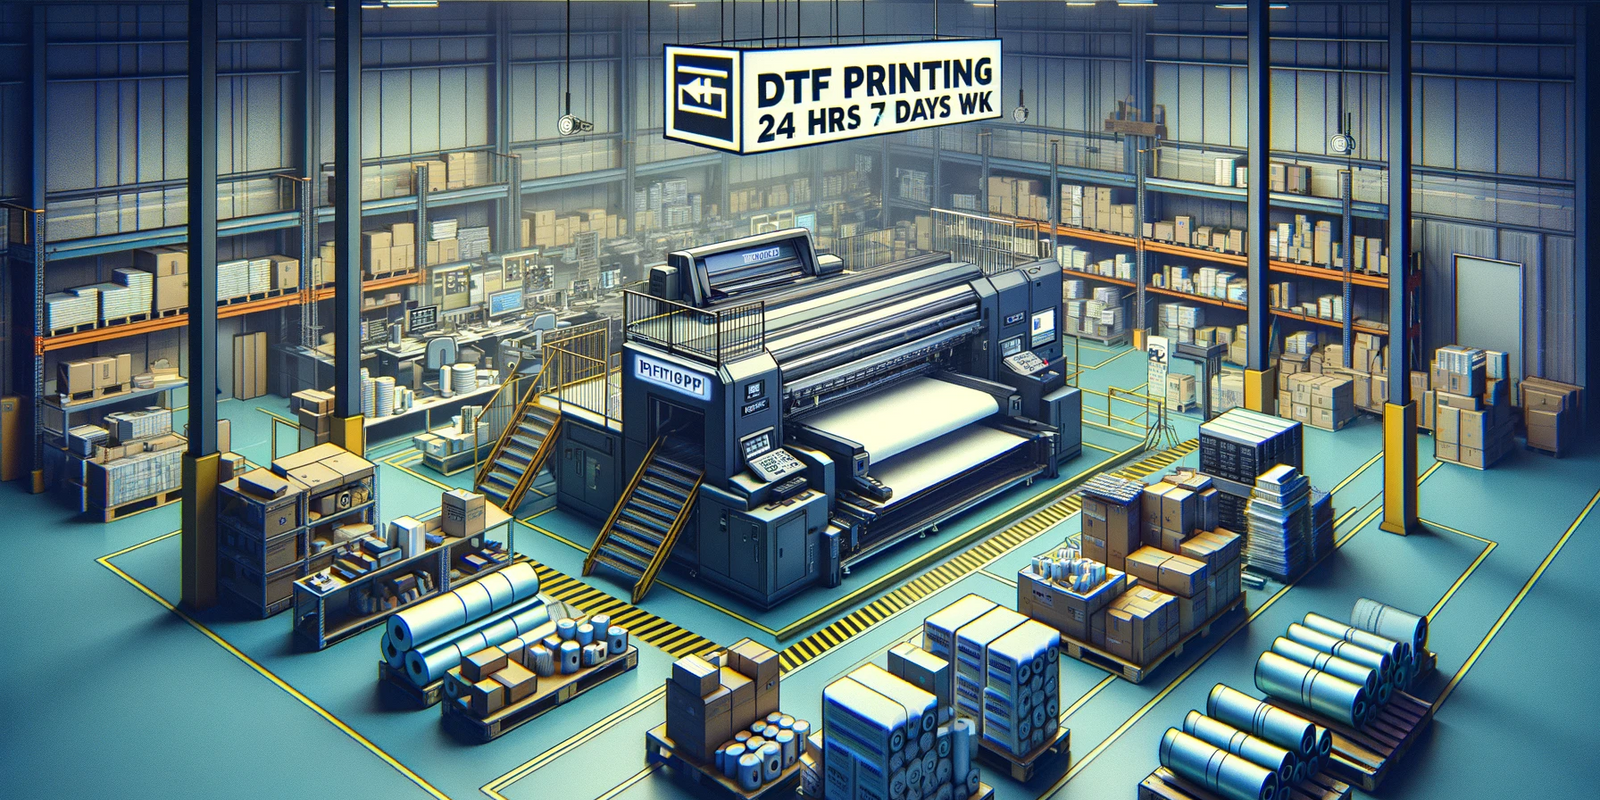 DTF printing machine operating 24/7, producing vibrant prints.